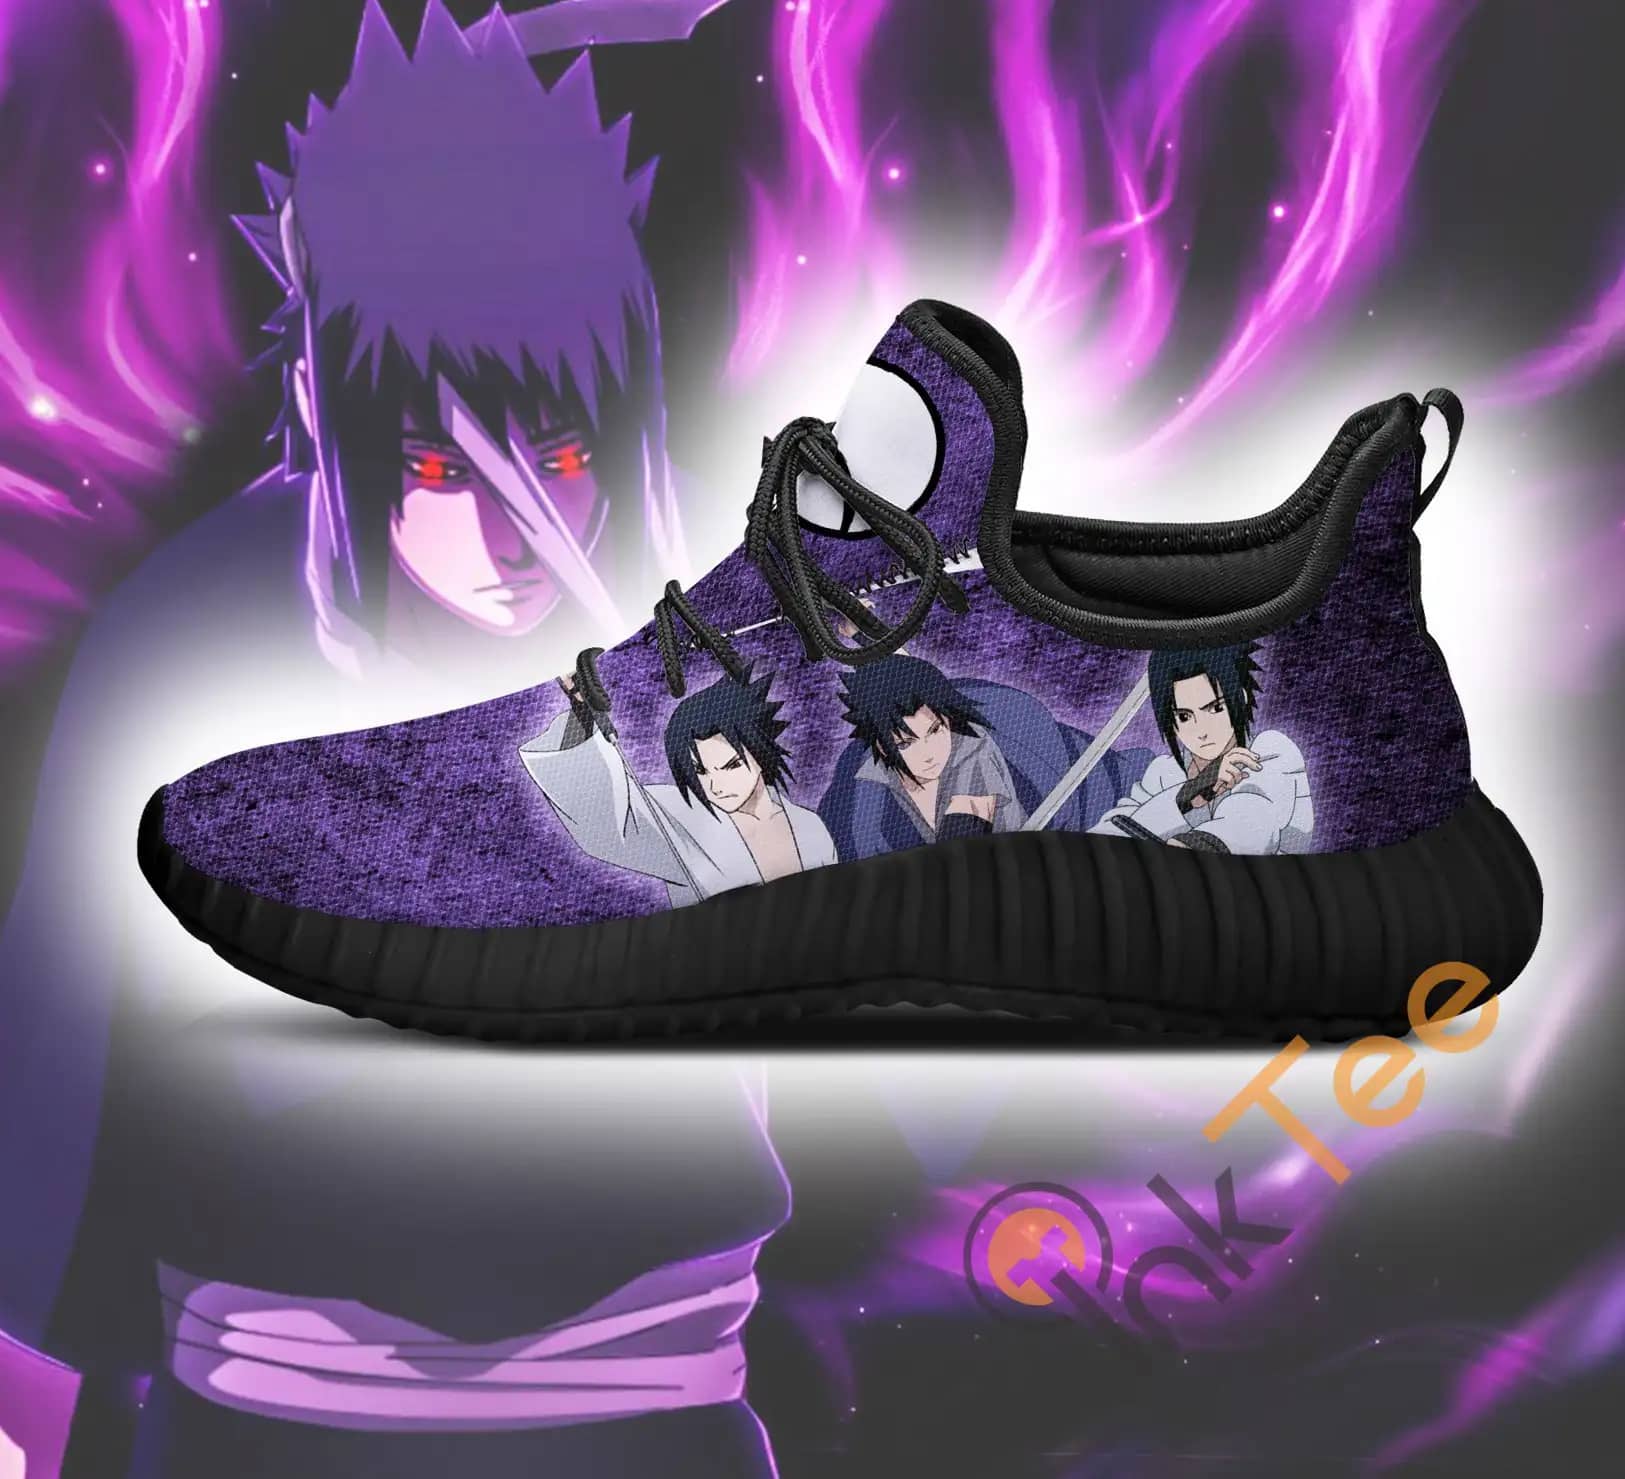 Inktee Store - Sasuke Naruto Anime Amazon Reze Shoes Image